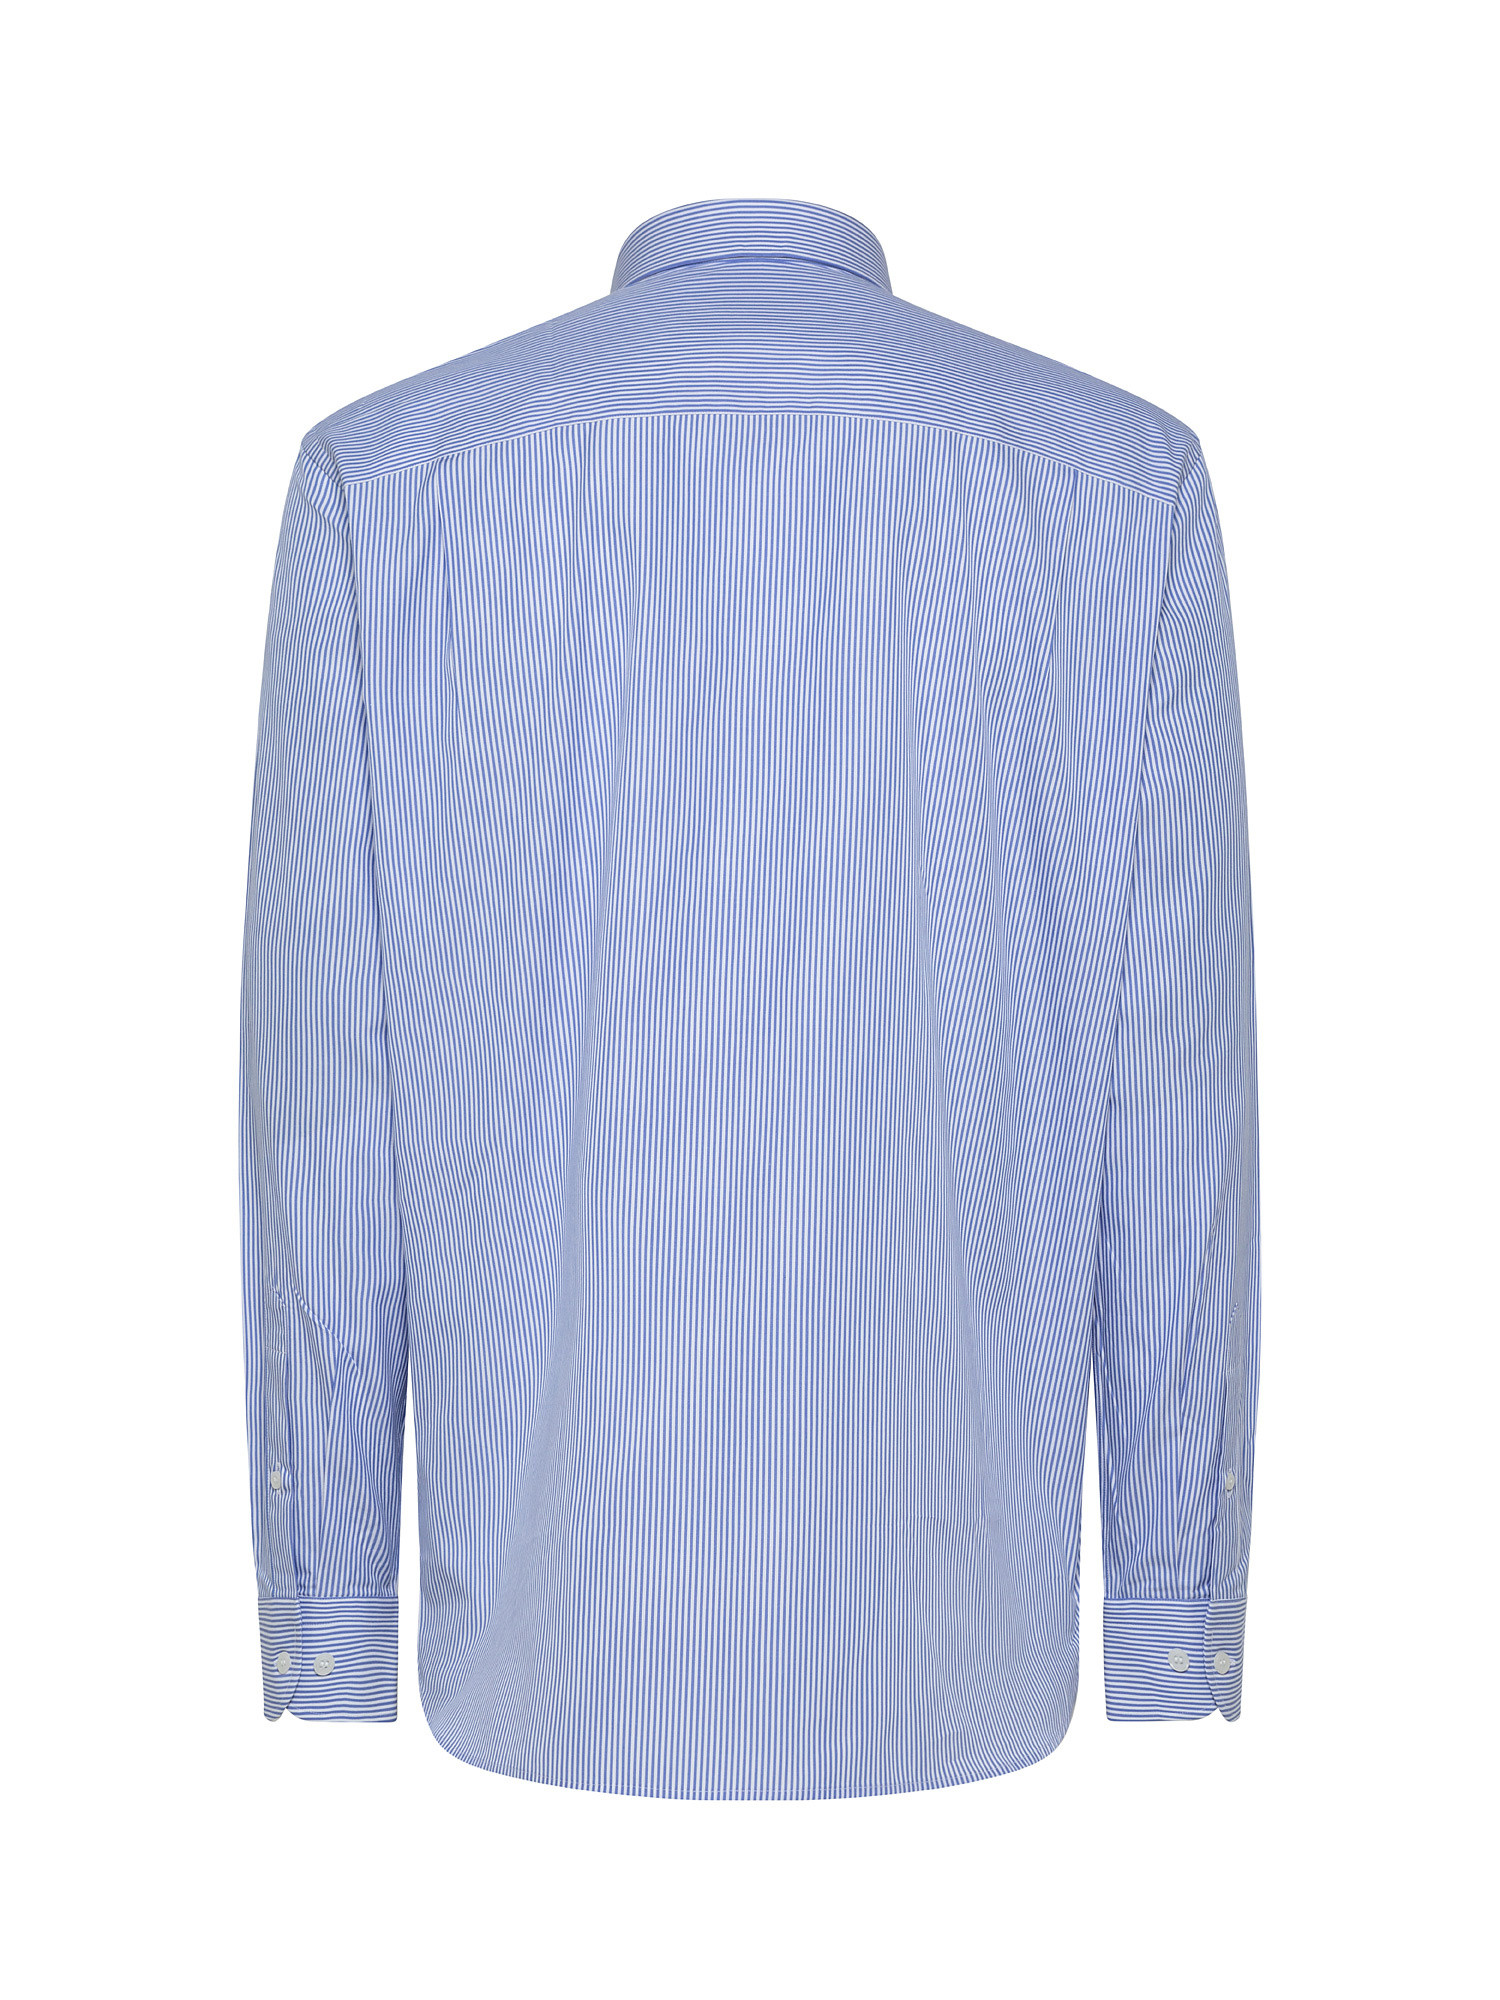 Camicia regular fit cotone popeline, Azzurro, large image number 1